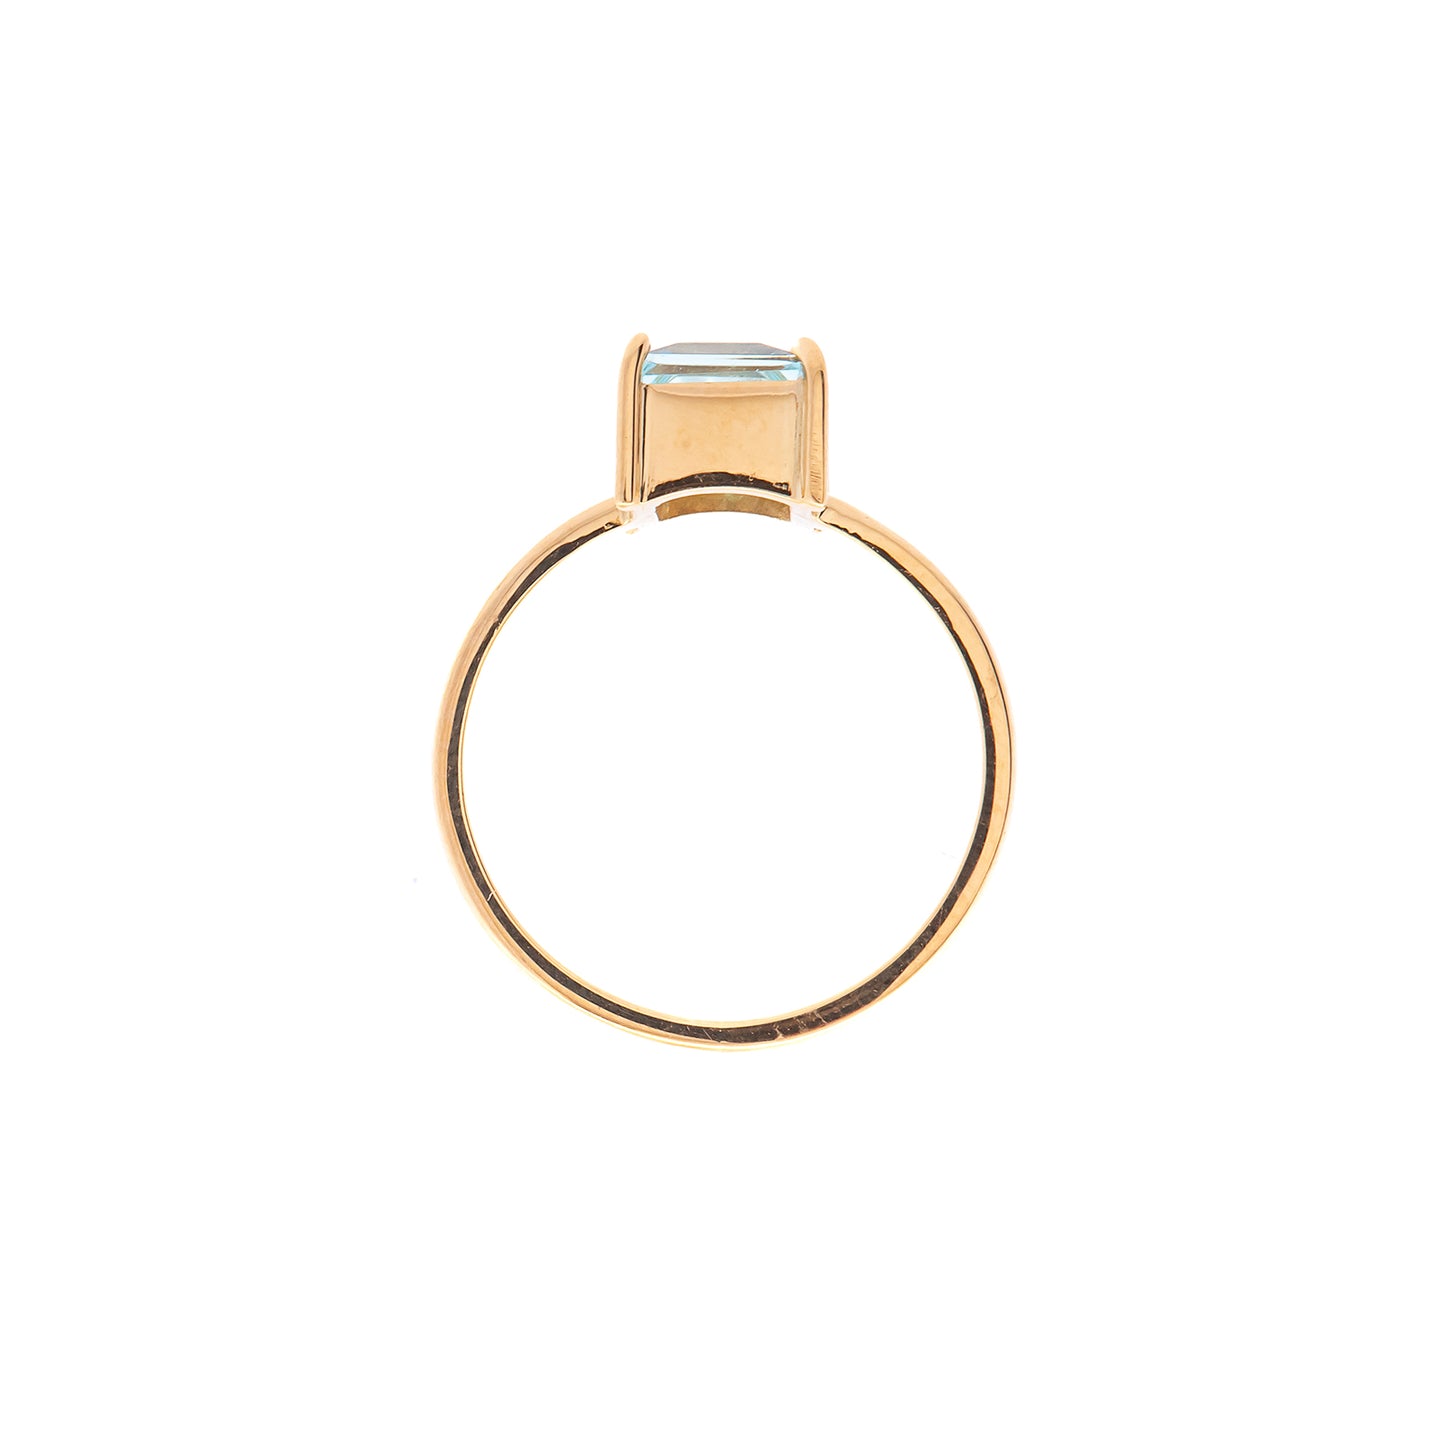 Edelsteinring Aquamarin Gelbgold 18K 750 Damenschmuck Goldring gemstone ring